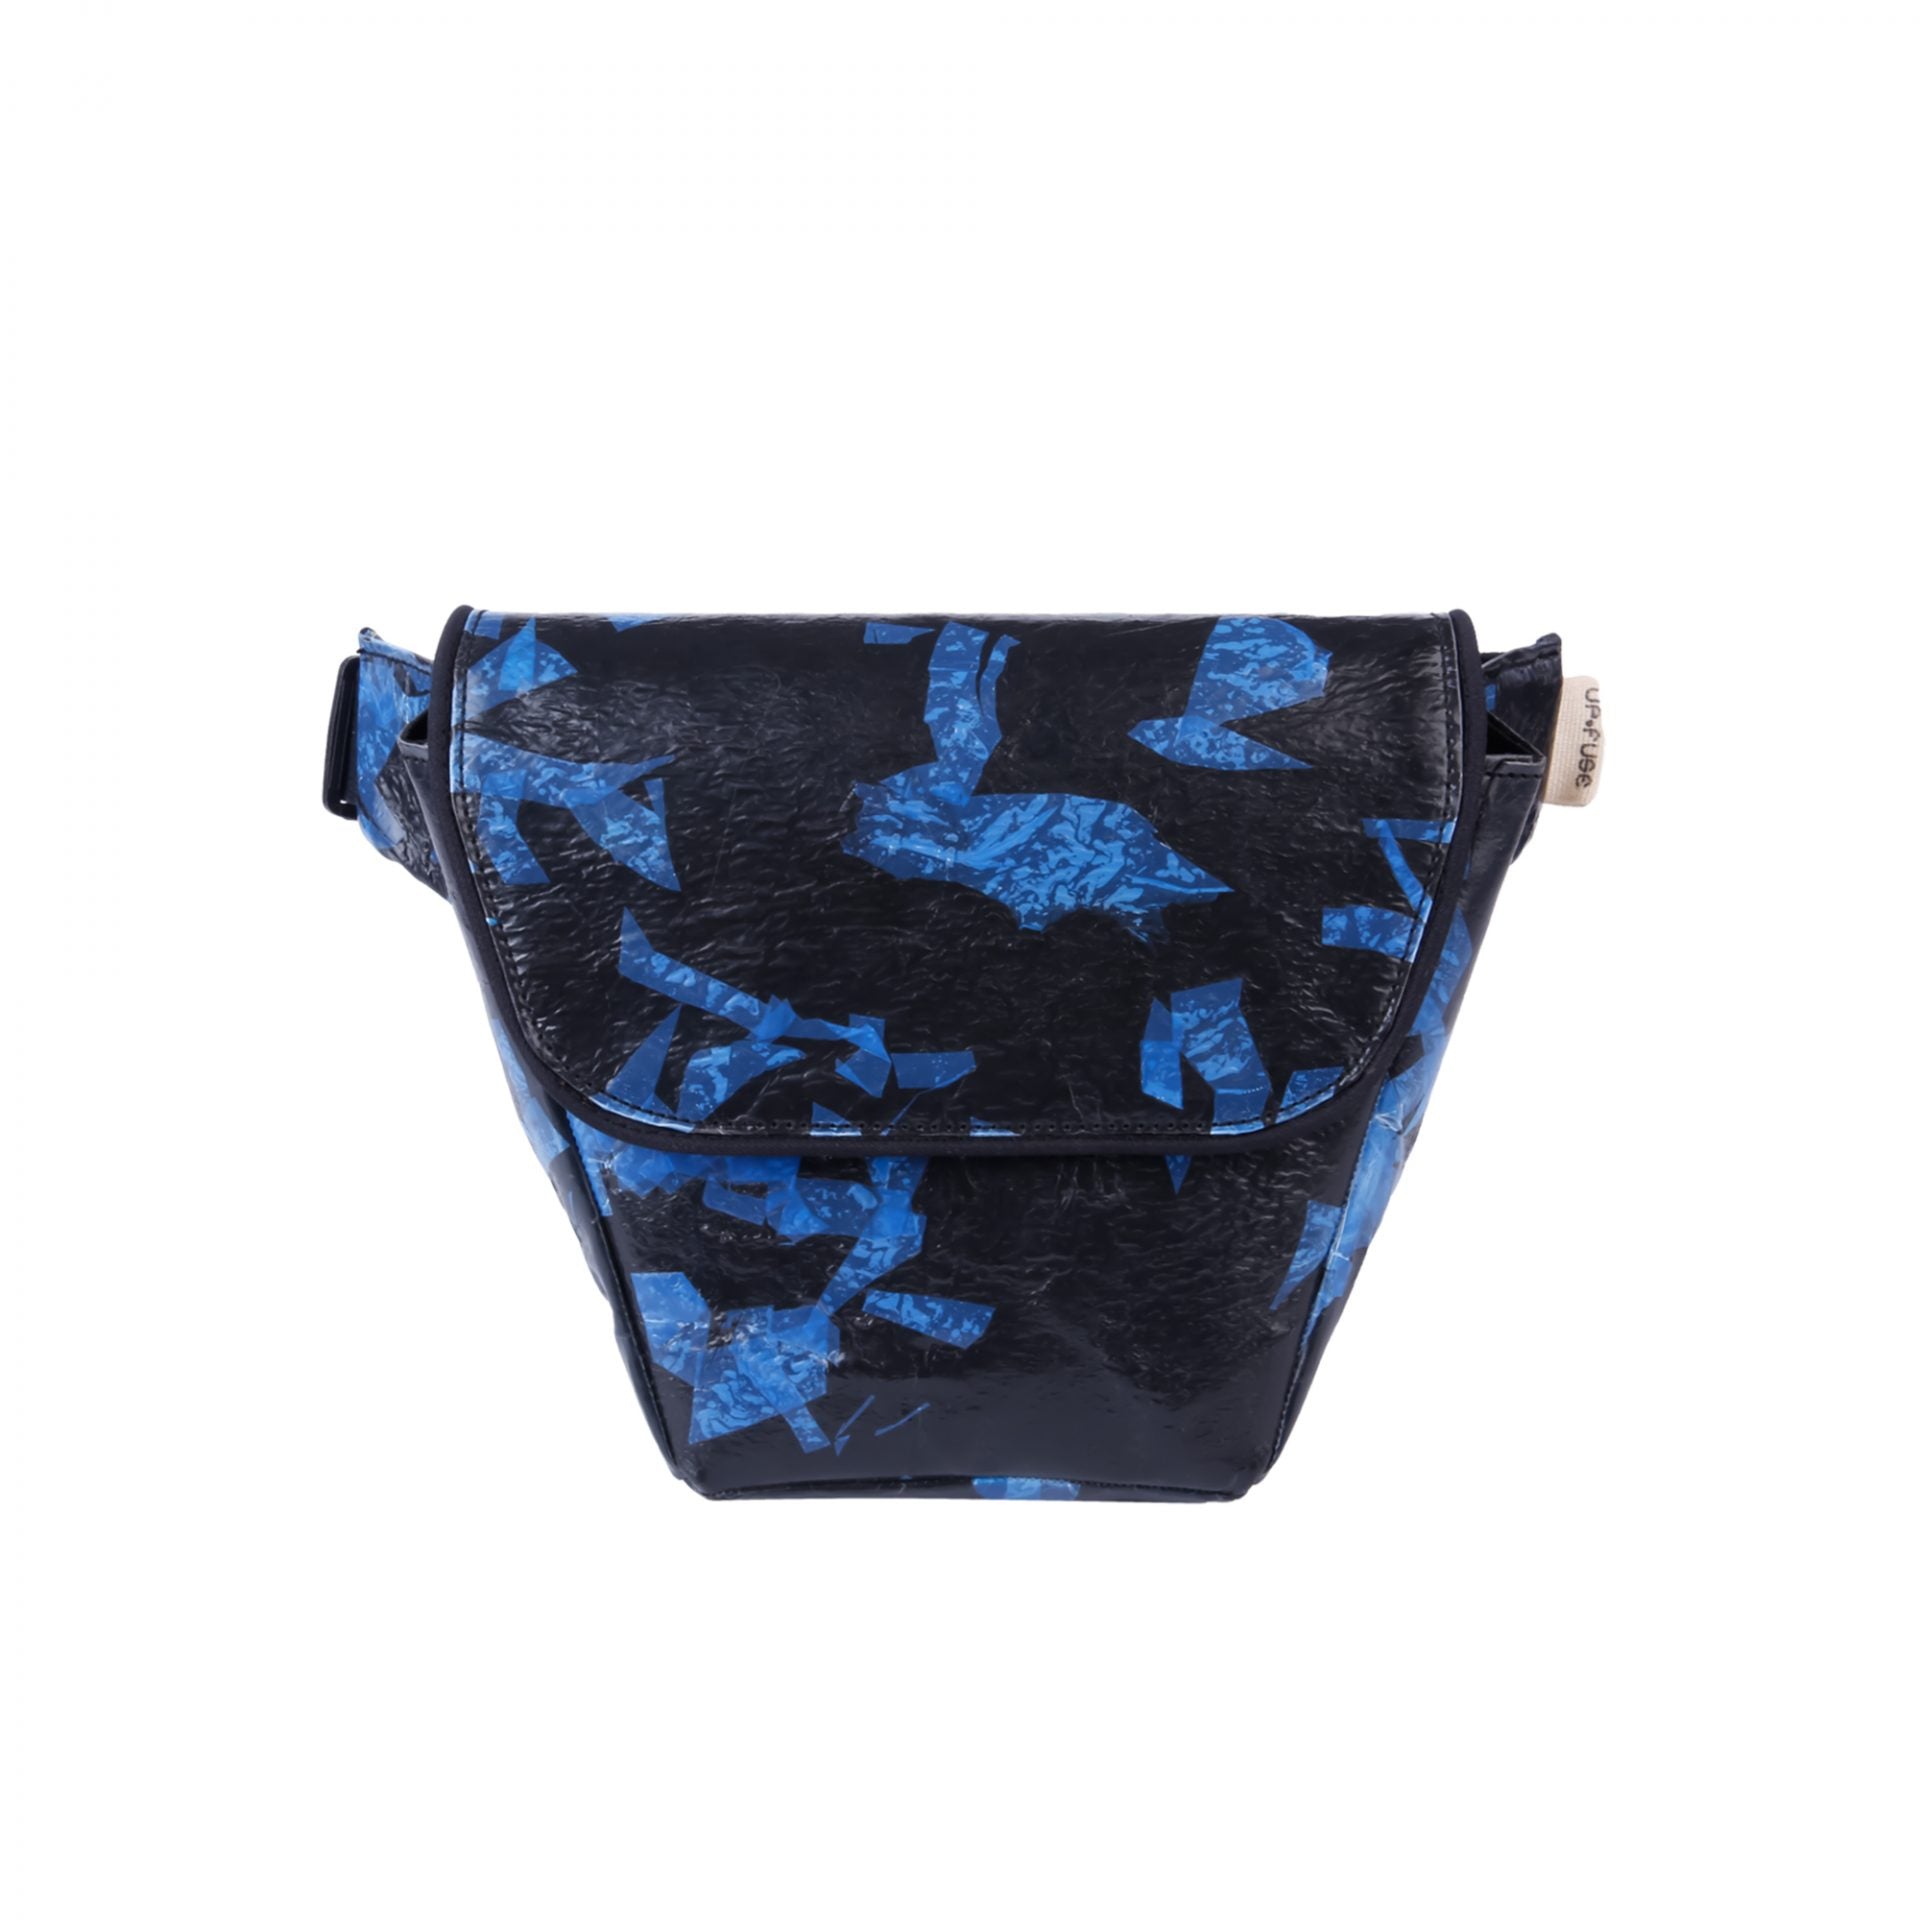 Candy Waist Bag, blue sprinkles pattern